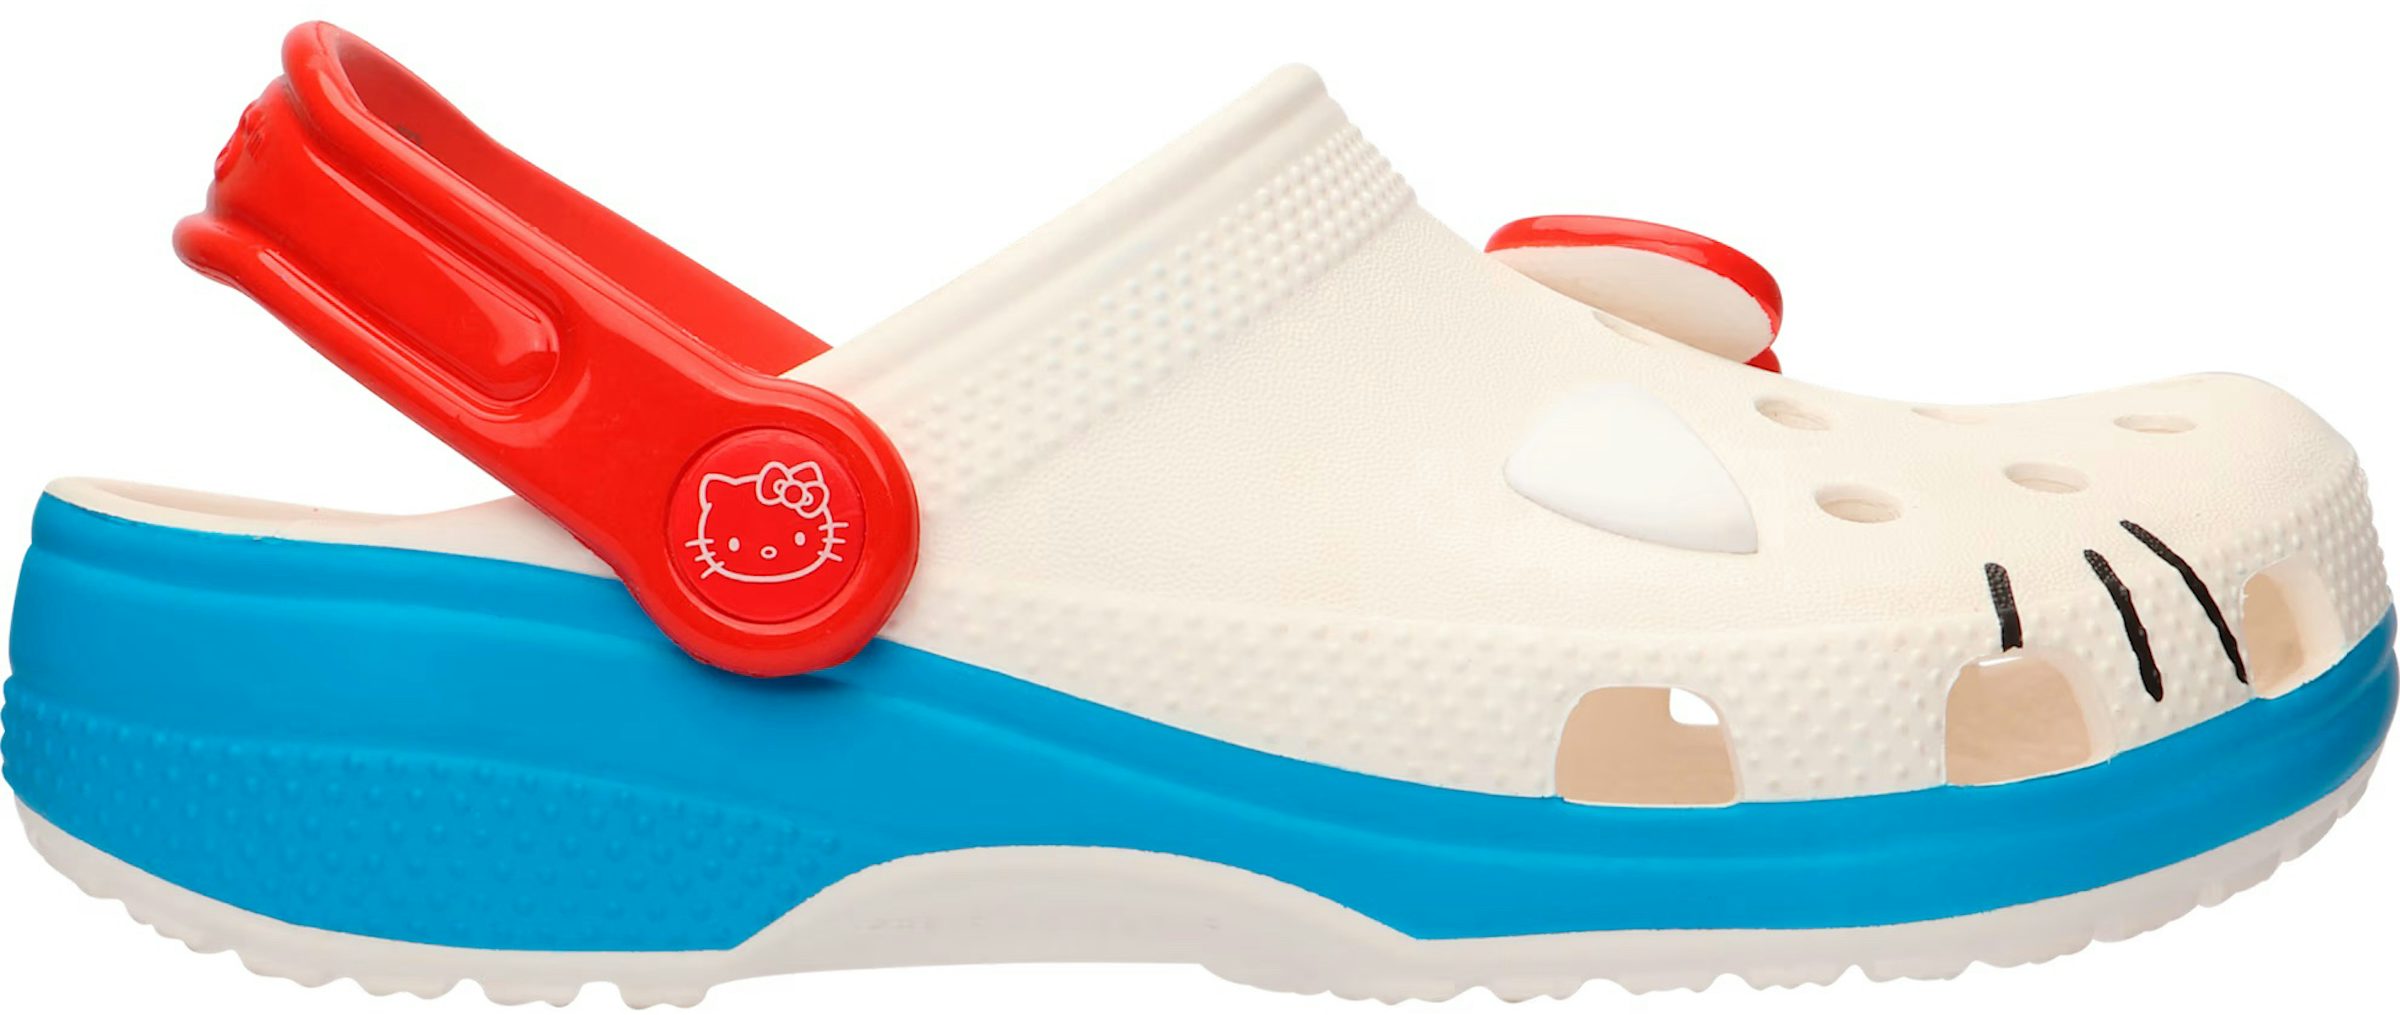 Shoe Charms for Kaws, 25 PCS Waterproof Shoe Decoration for Croc